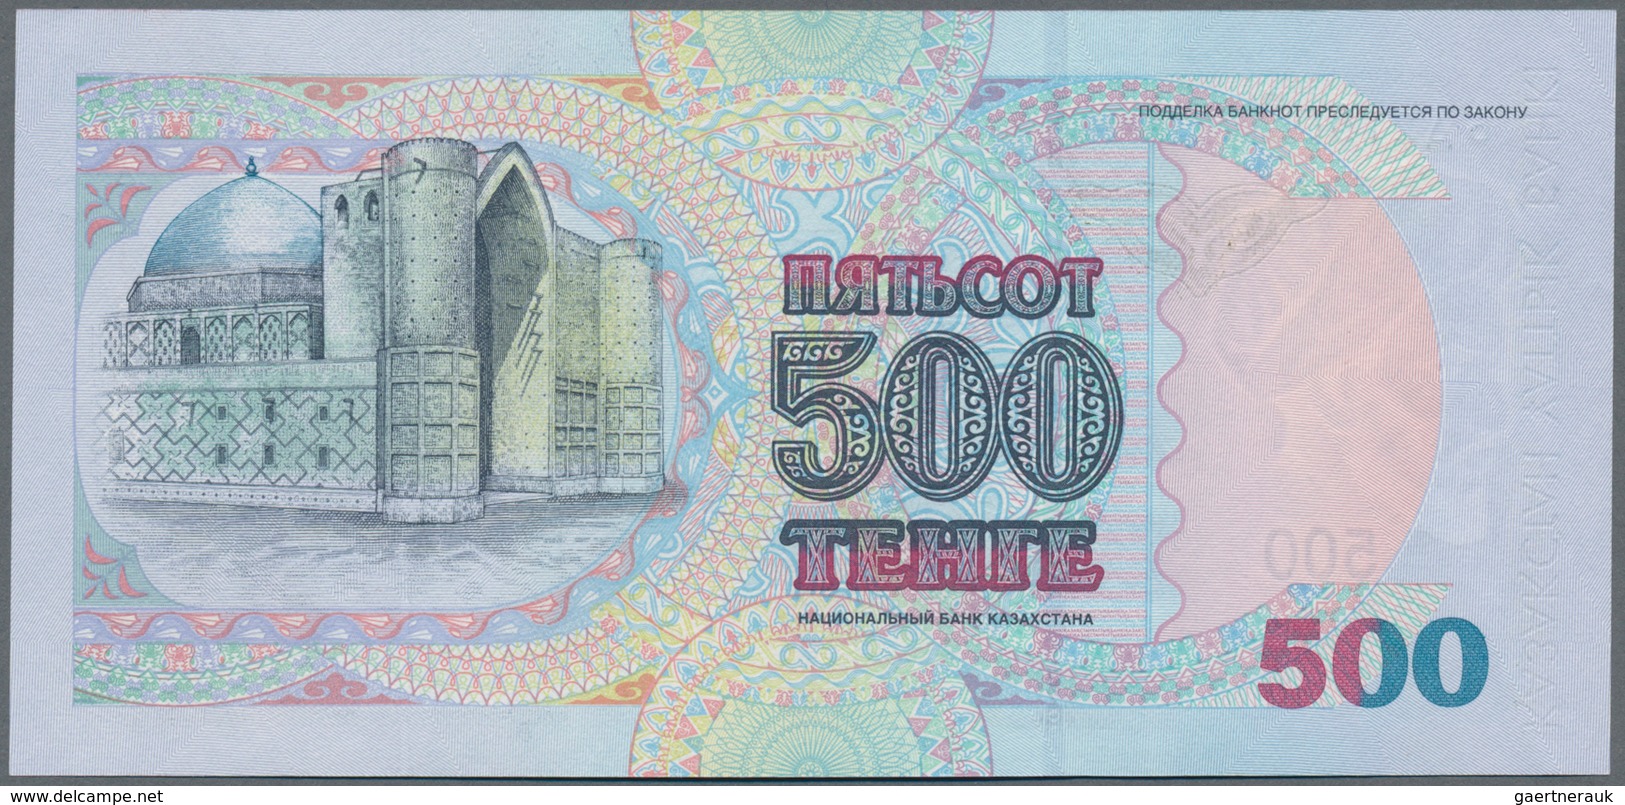 Kazakhstan / Kasachstan: Lot with 7 banknotes comprising 2x 200 Tenge 1999 P.20a,b (UNC), 2x 500 Ten